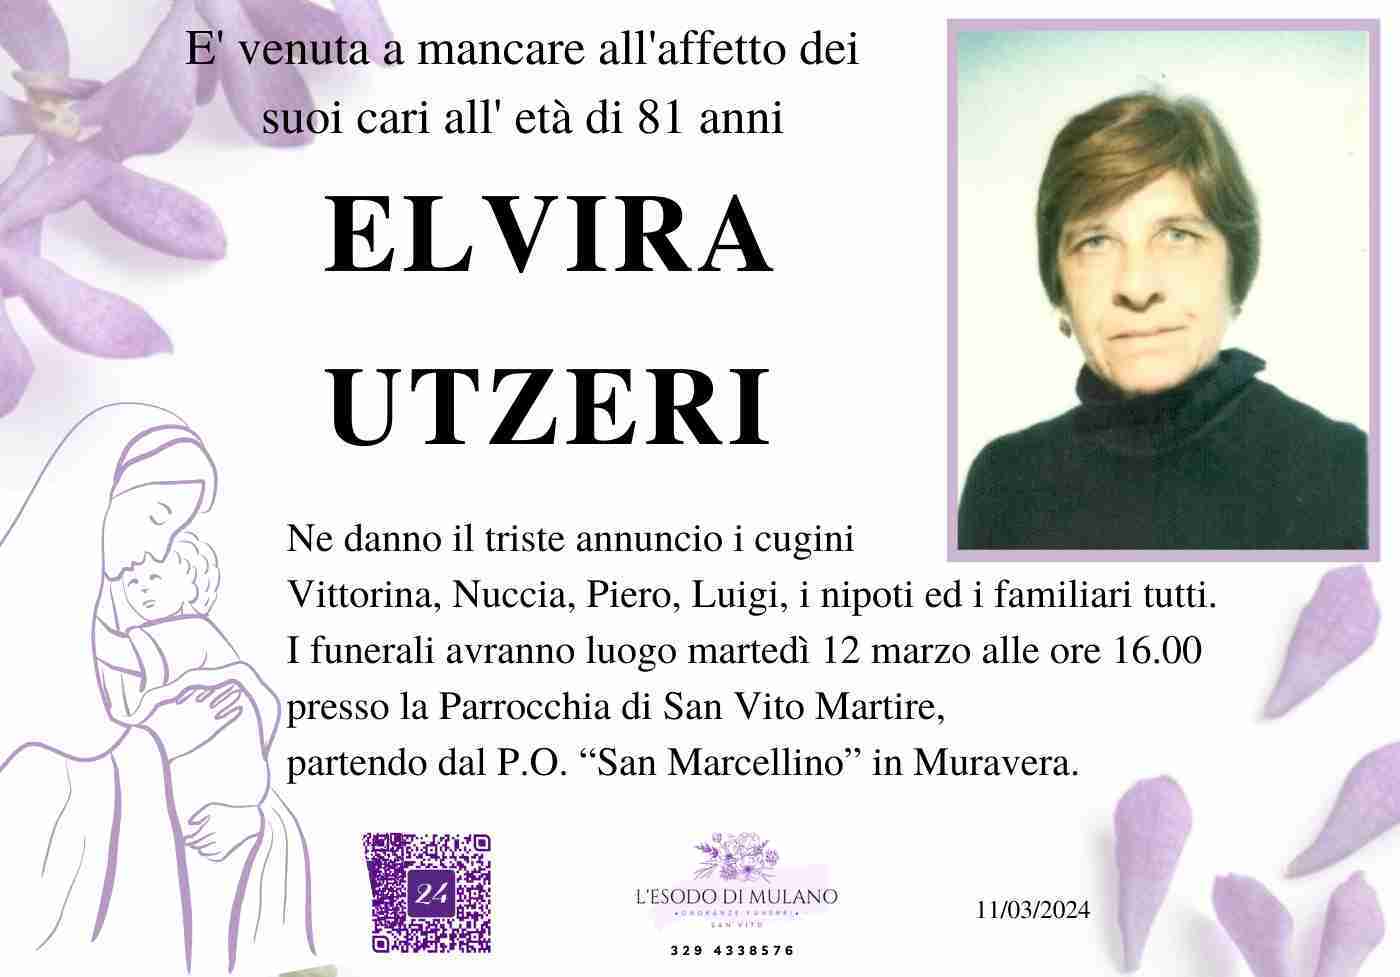 Elvira Utzeri